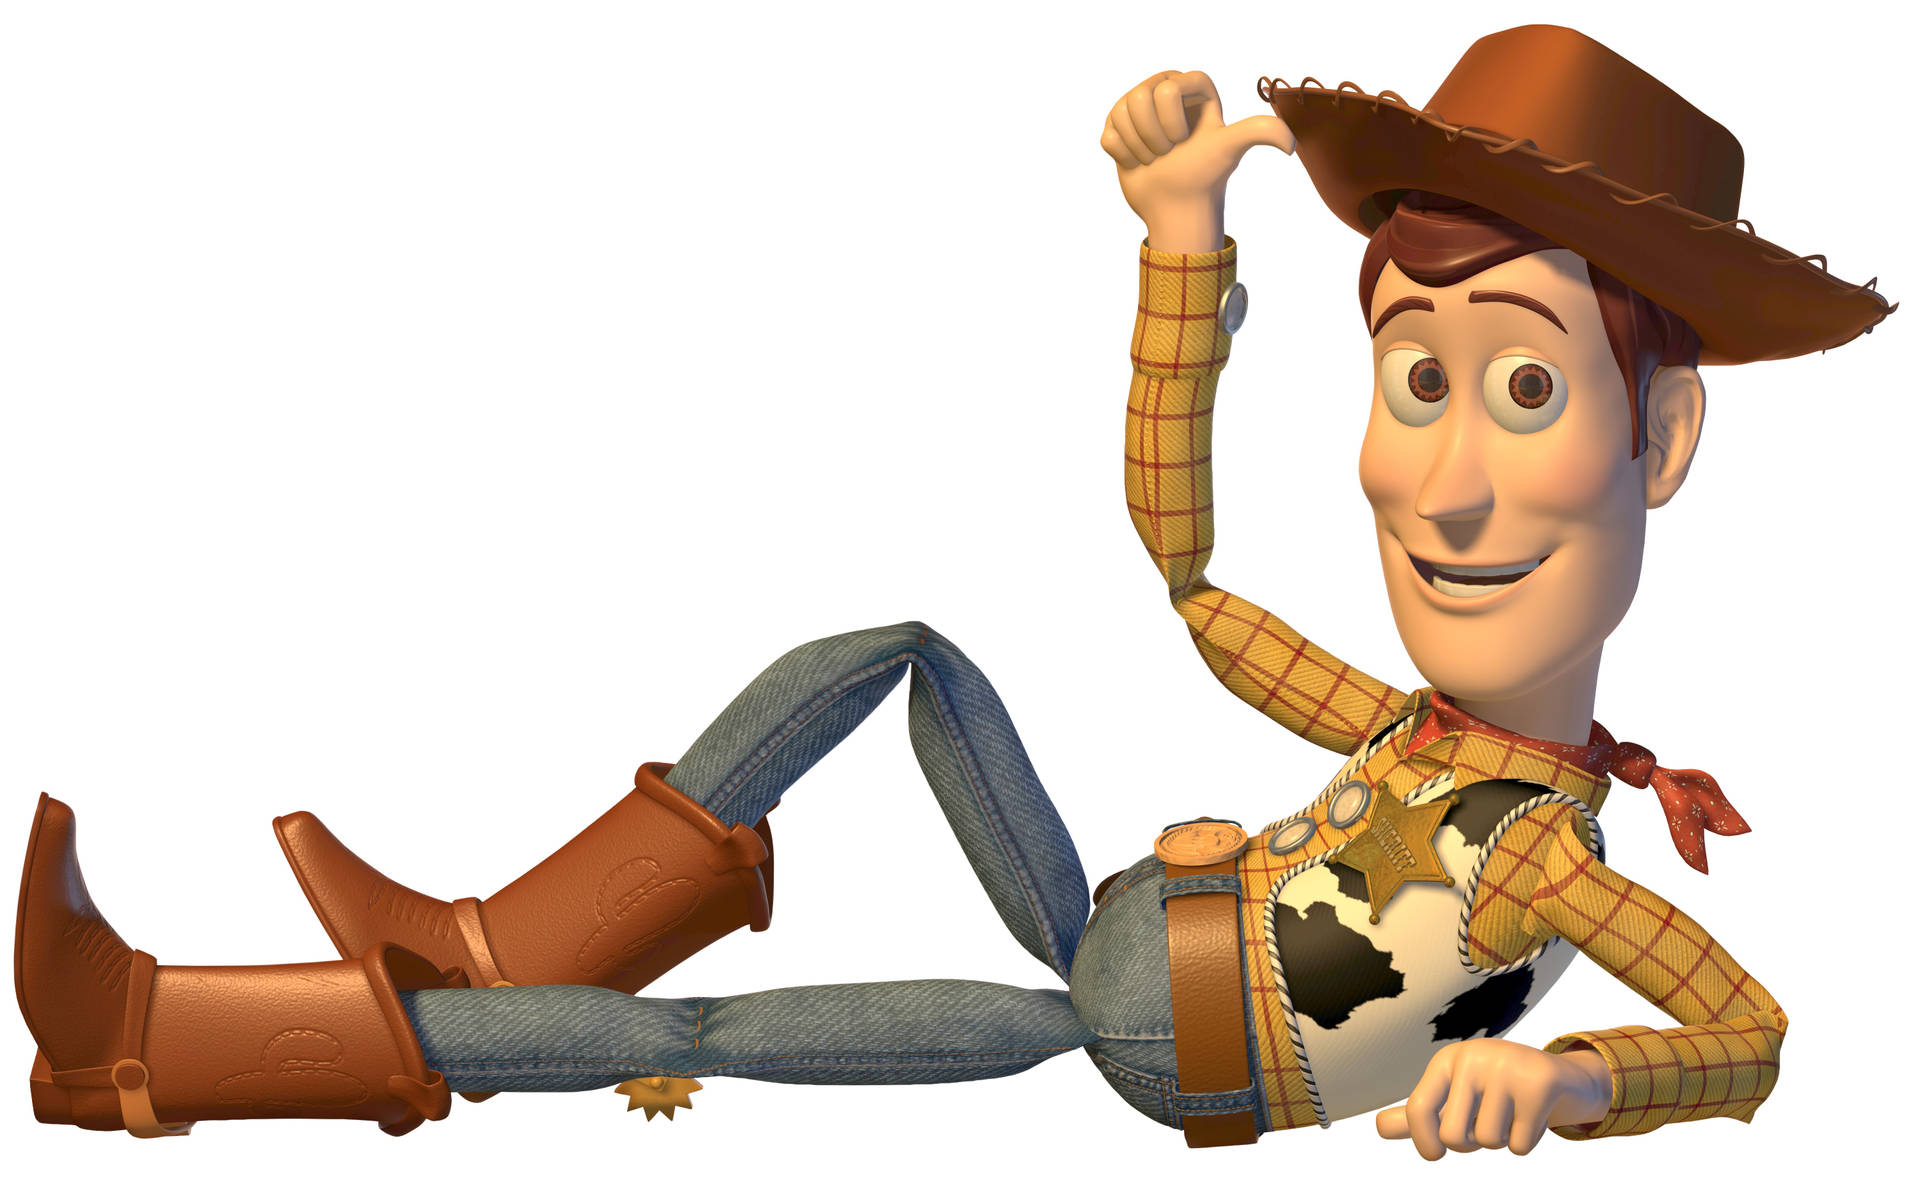 Woody The Cowboy Sheriff Wallpaper